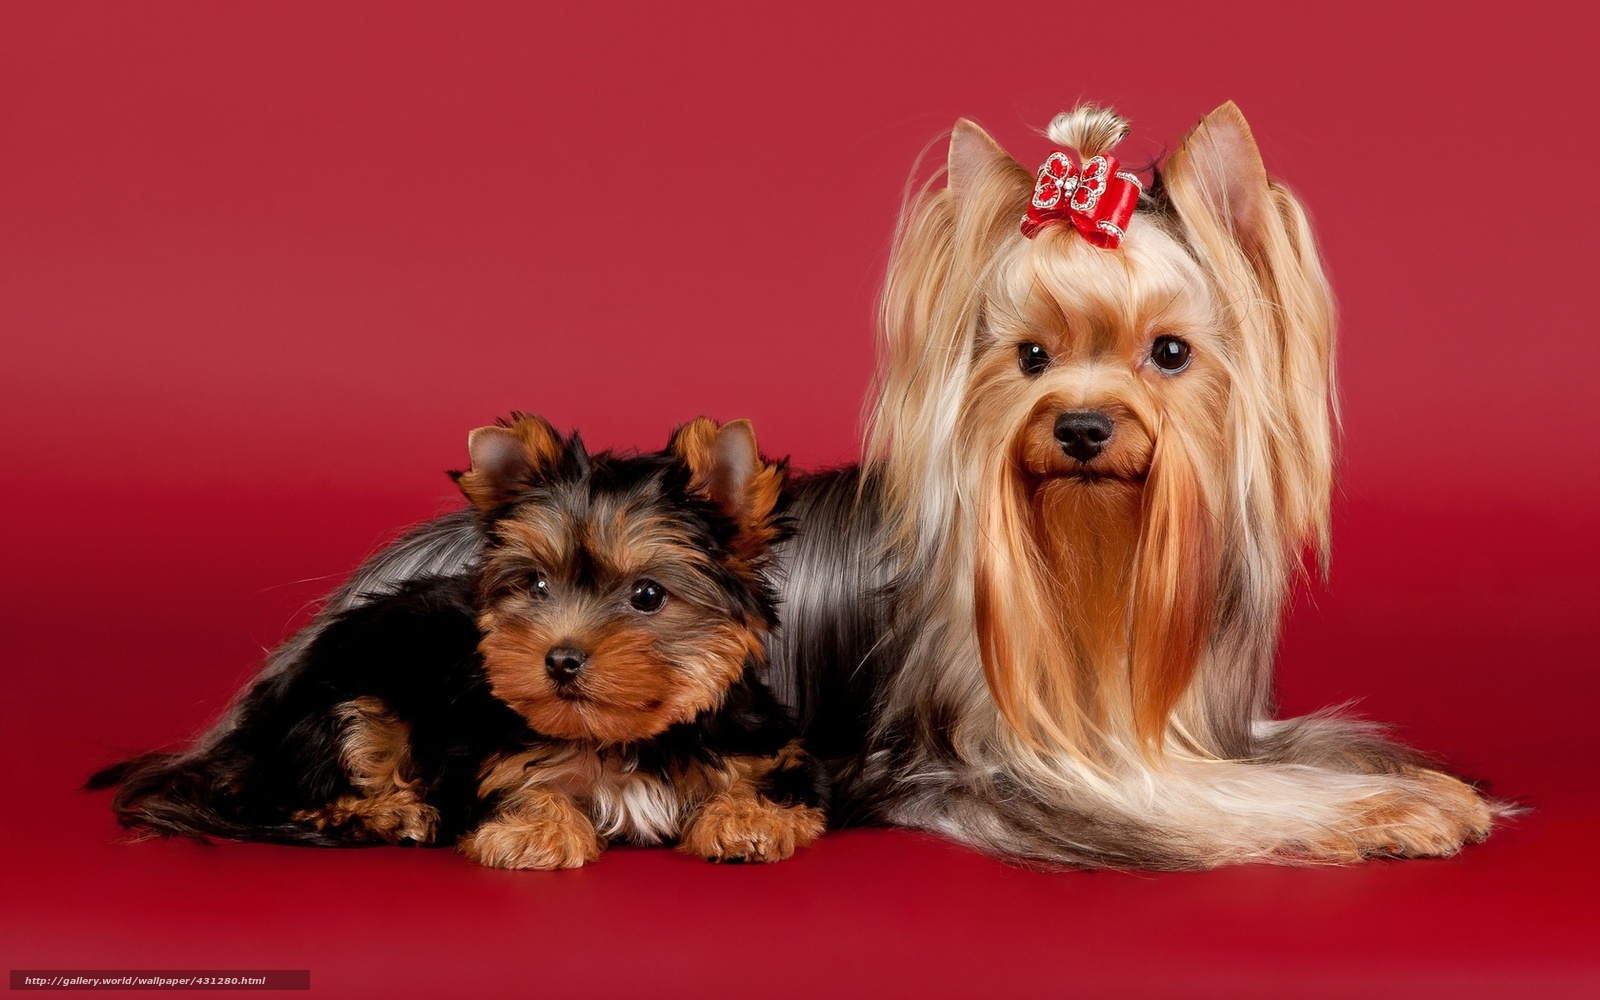 Wallpaper Dogs Yorkshire Terrier Beauty Bow Desktop